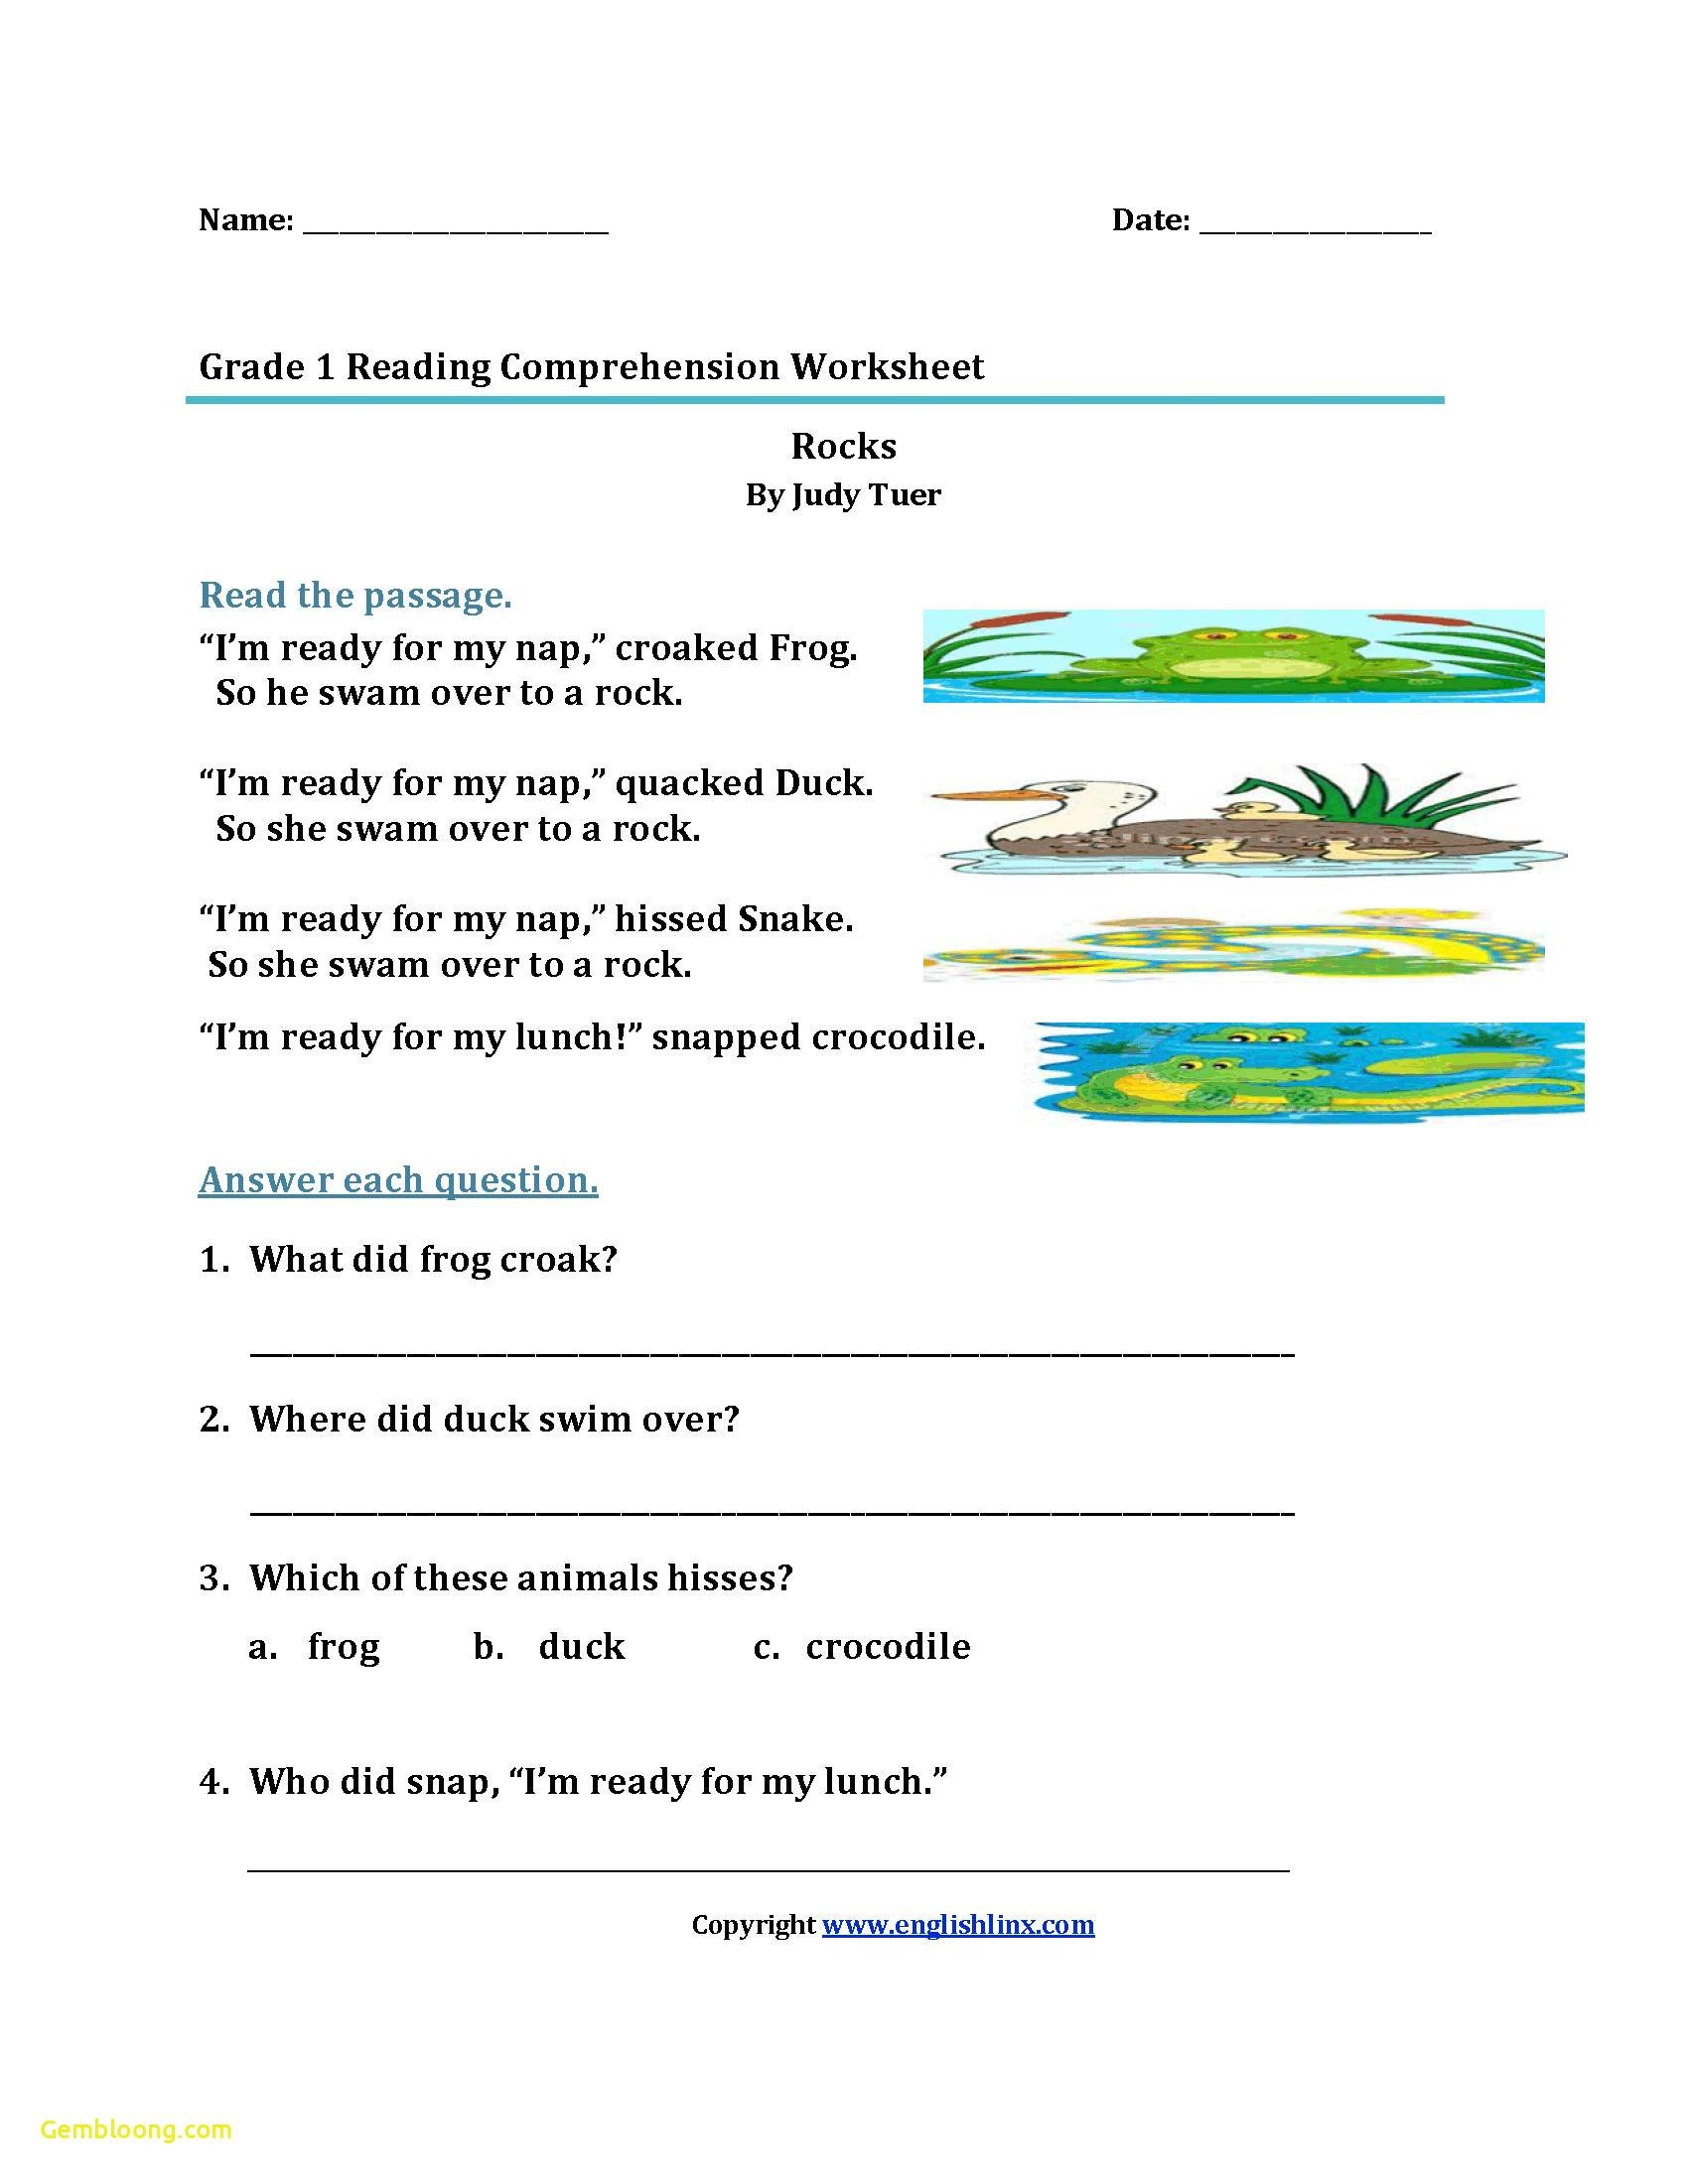 Reading Comprehension Worksheets For 1St Grade  Cramerforcongress With Reading Comprehension Worksheets High School